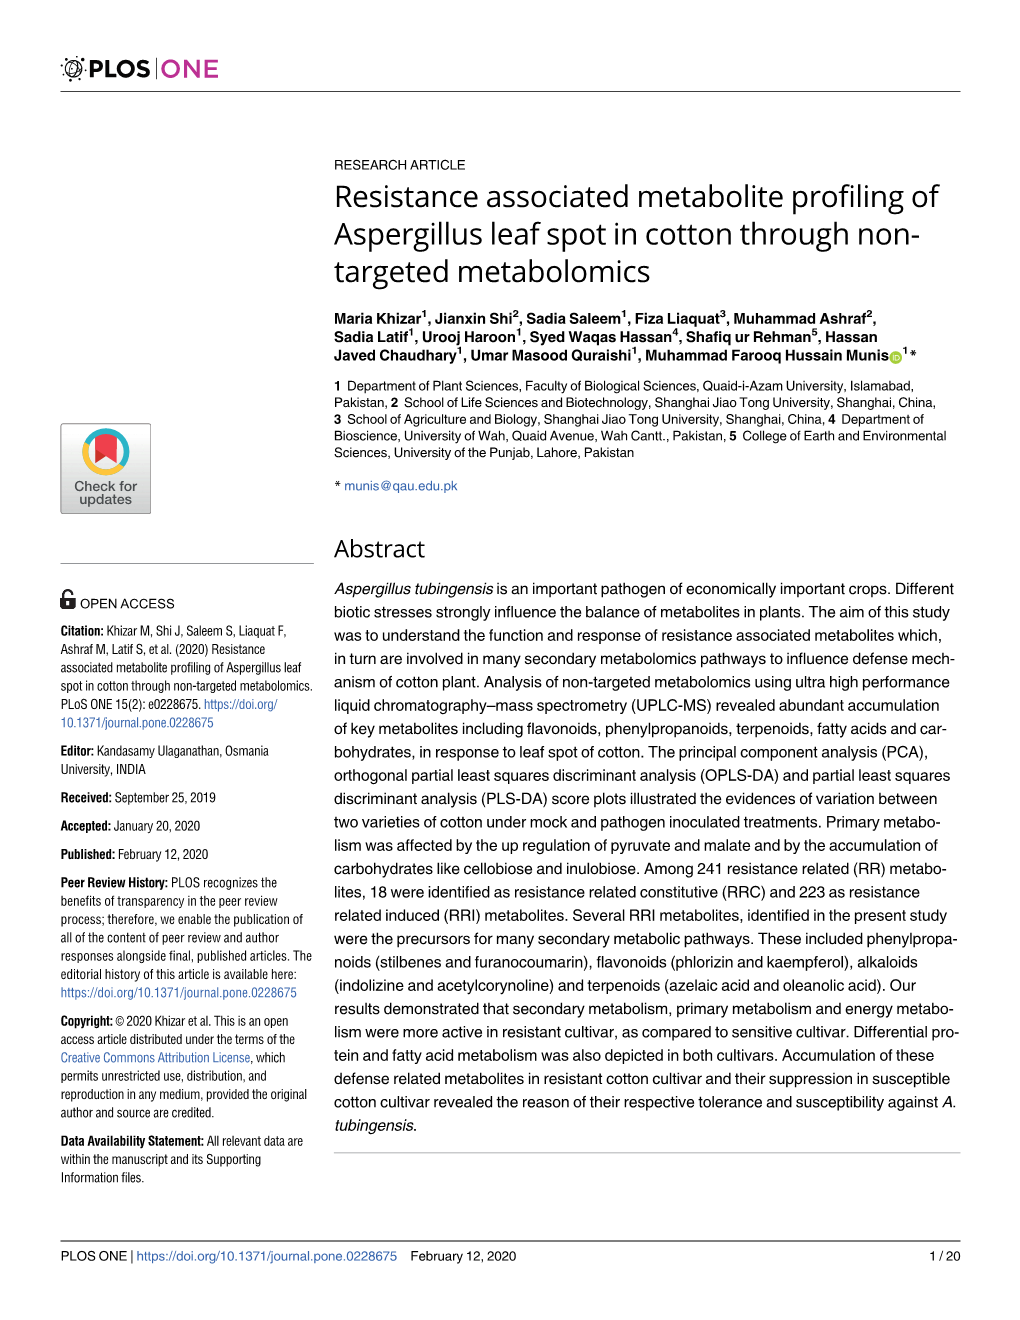 Resistance Associated Metabolite Profiling of Aspergillus Leaf Spot in Cotton Through Non-Targeted Metabolomics